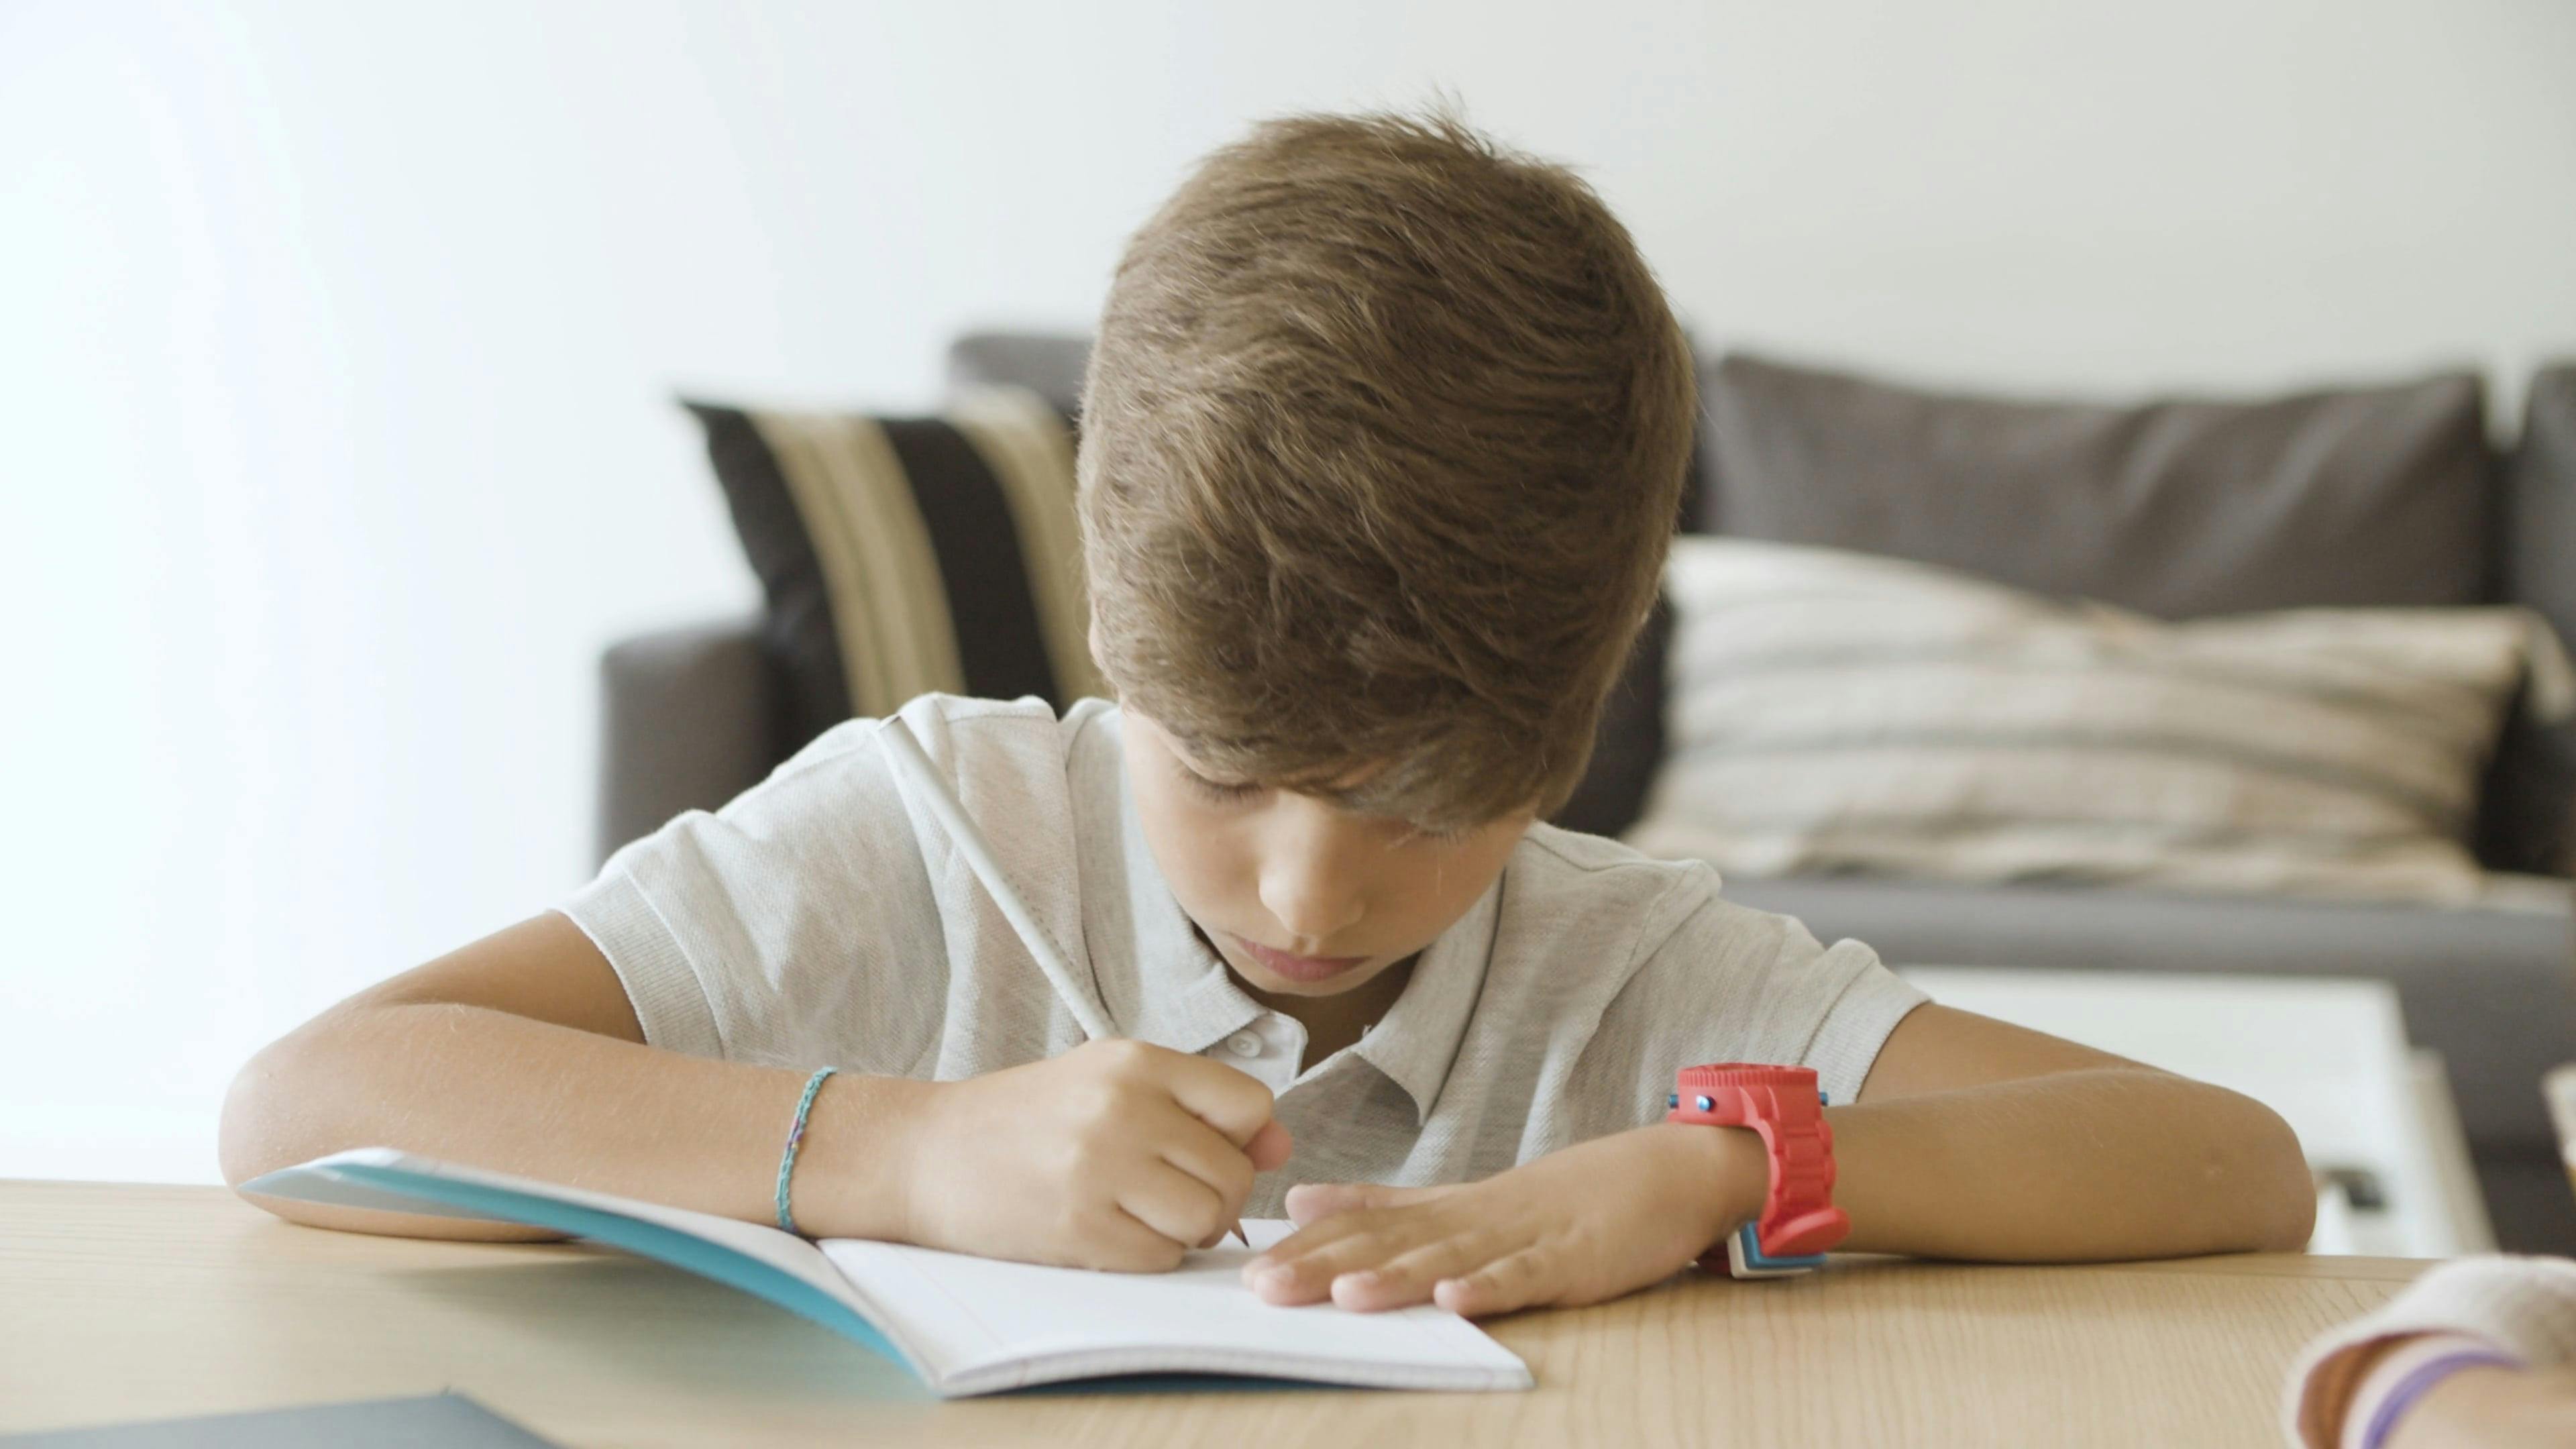 image of a boy doing homework